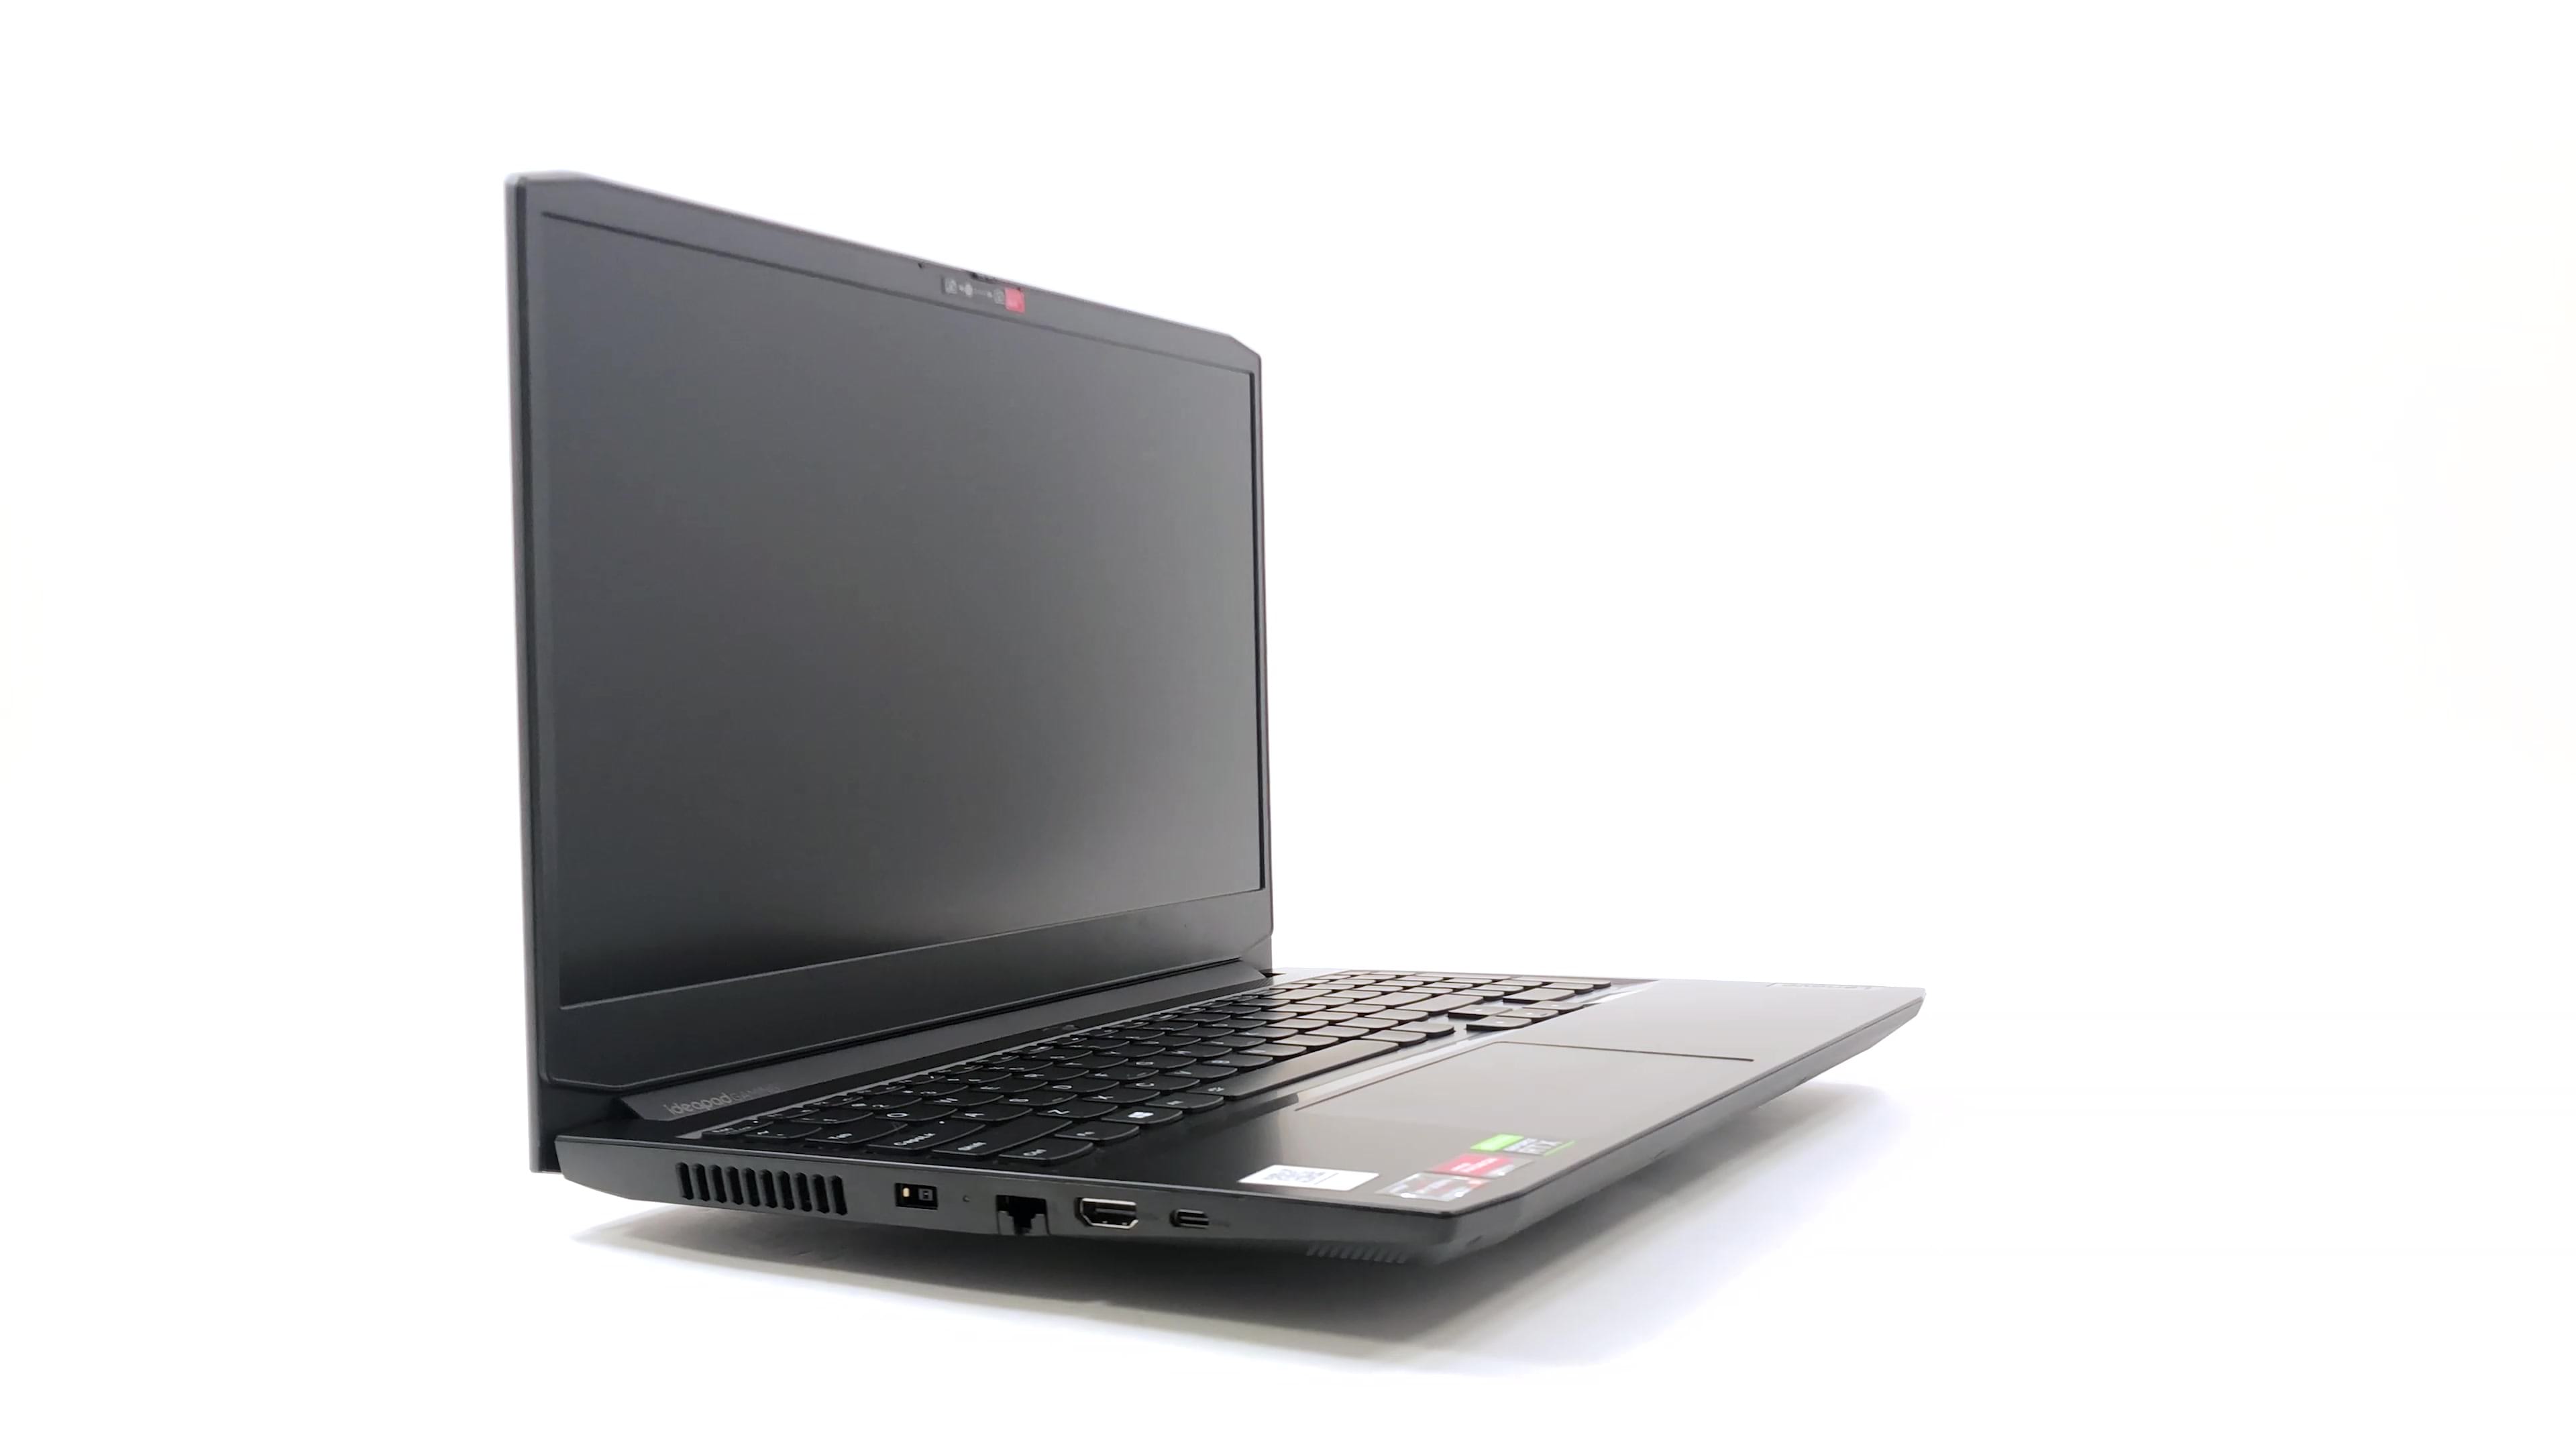 Lenovo - 2021 - IdeaPad Gaming 3 - Laptop Computer - 15.6 FHD Display  -120Hz - AMD Ryzen 5 5600H - 8GB RAM - 256GB Storage - NVIDIA GeForce GTX  1650